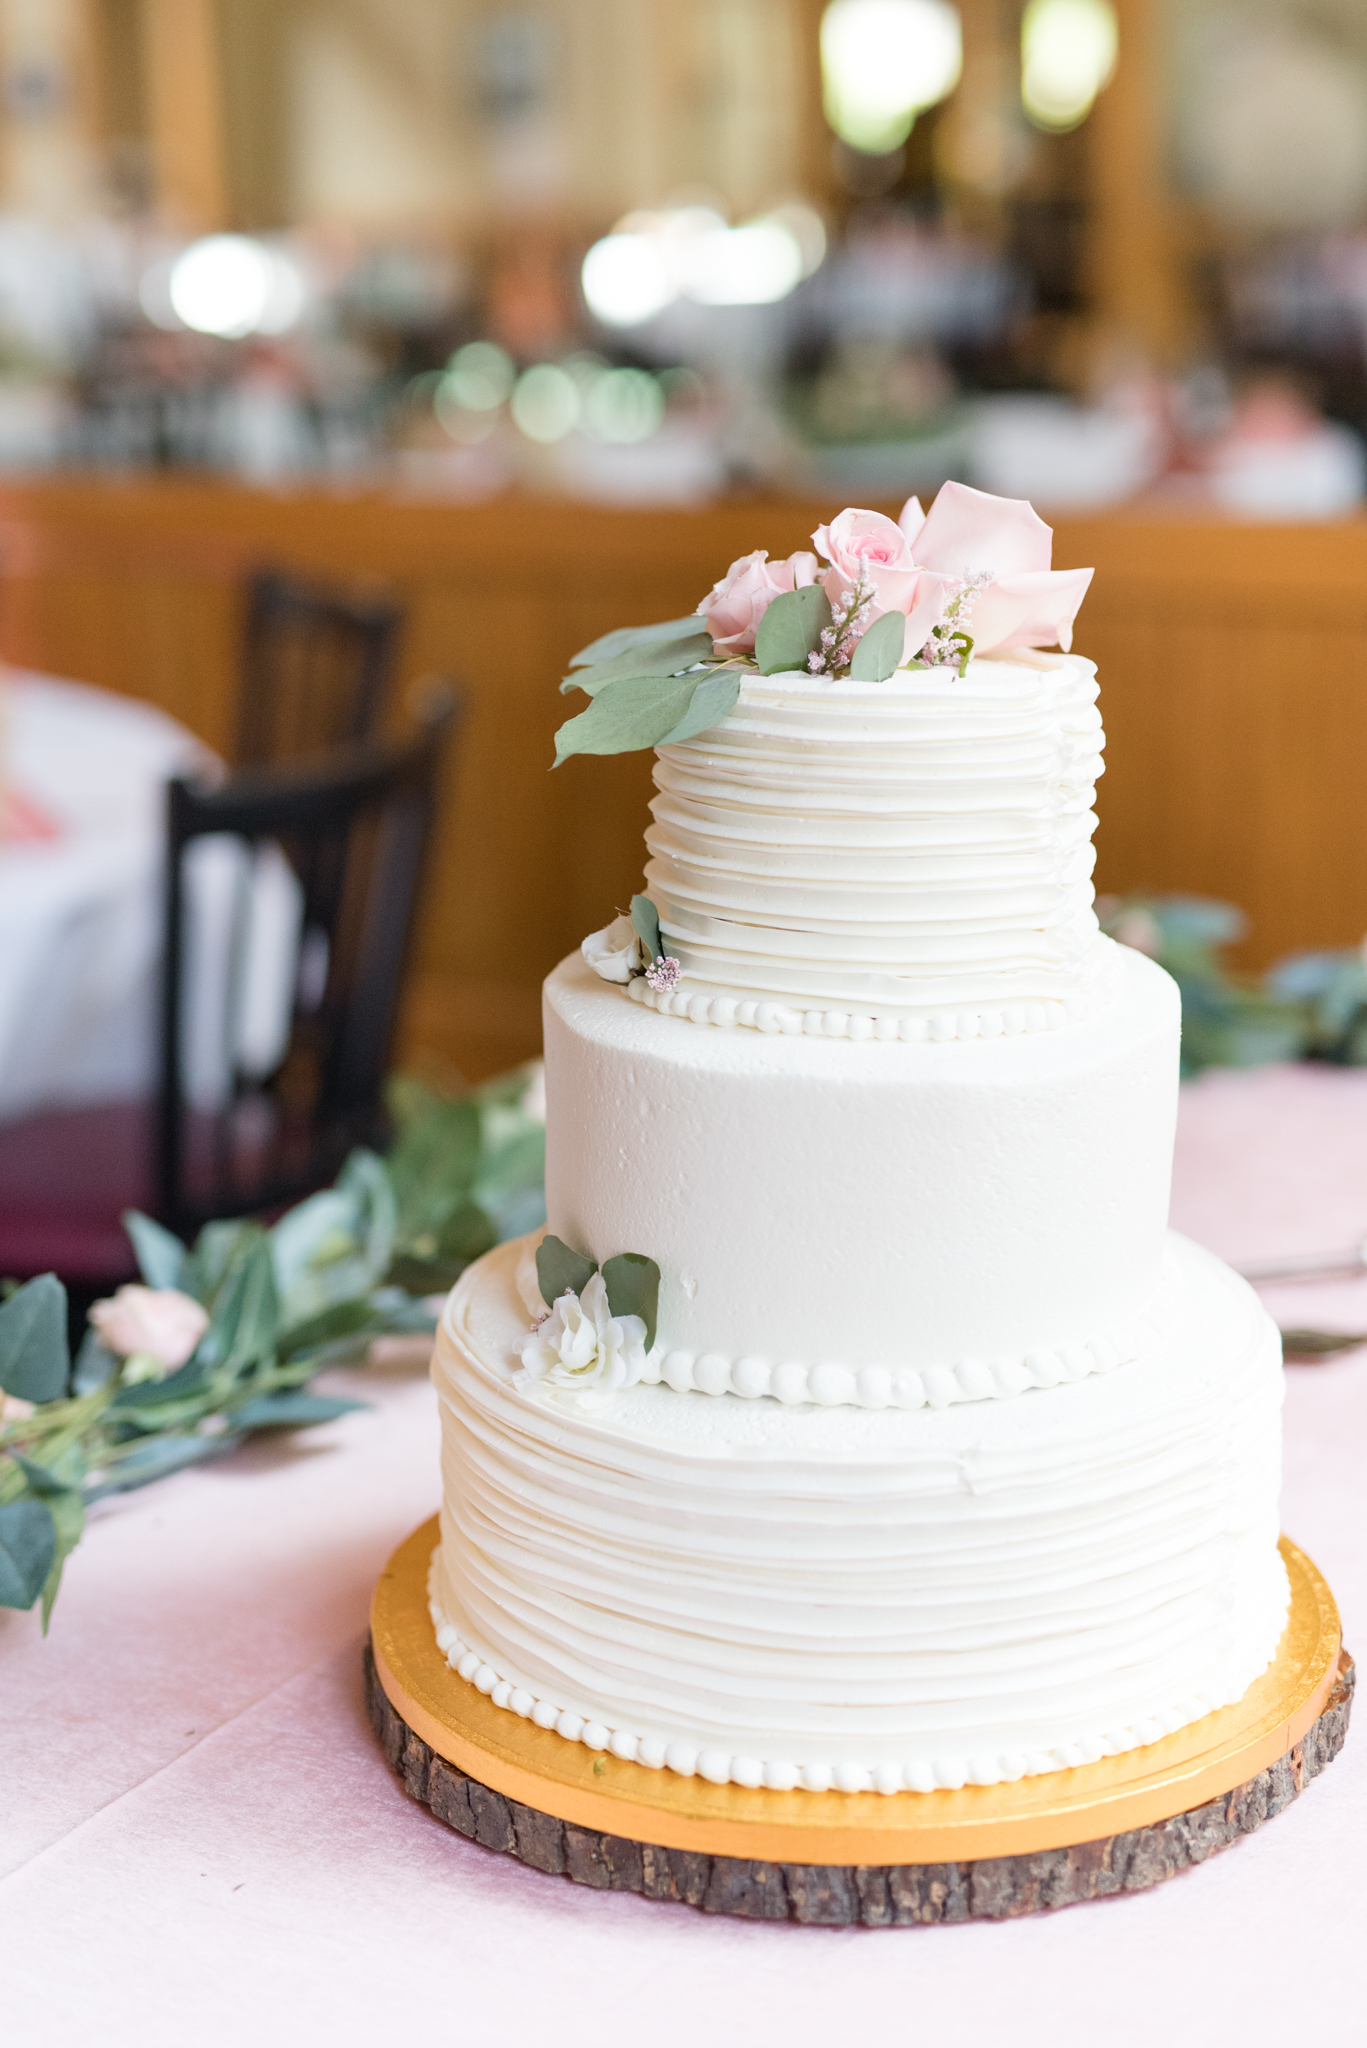 Wedding cake sits on table.